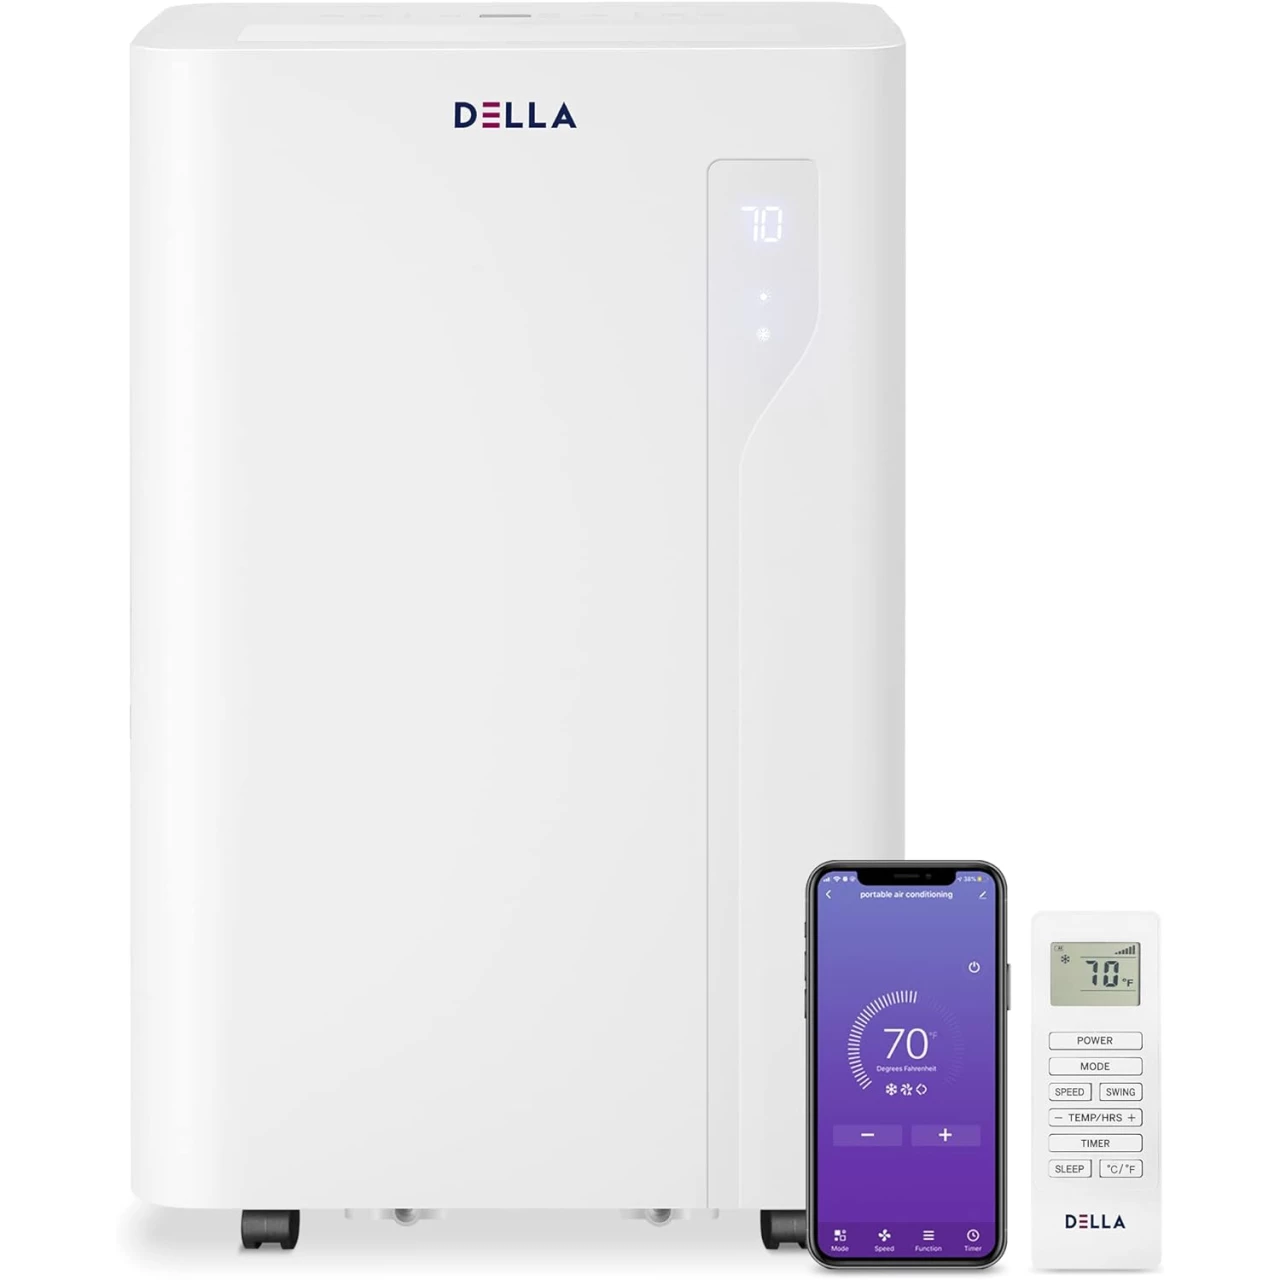 DELLA 14,000 BTU with Heat Pump Smart WiFi Enabled Portable Air Conditioner